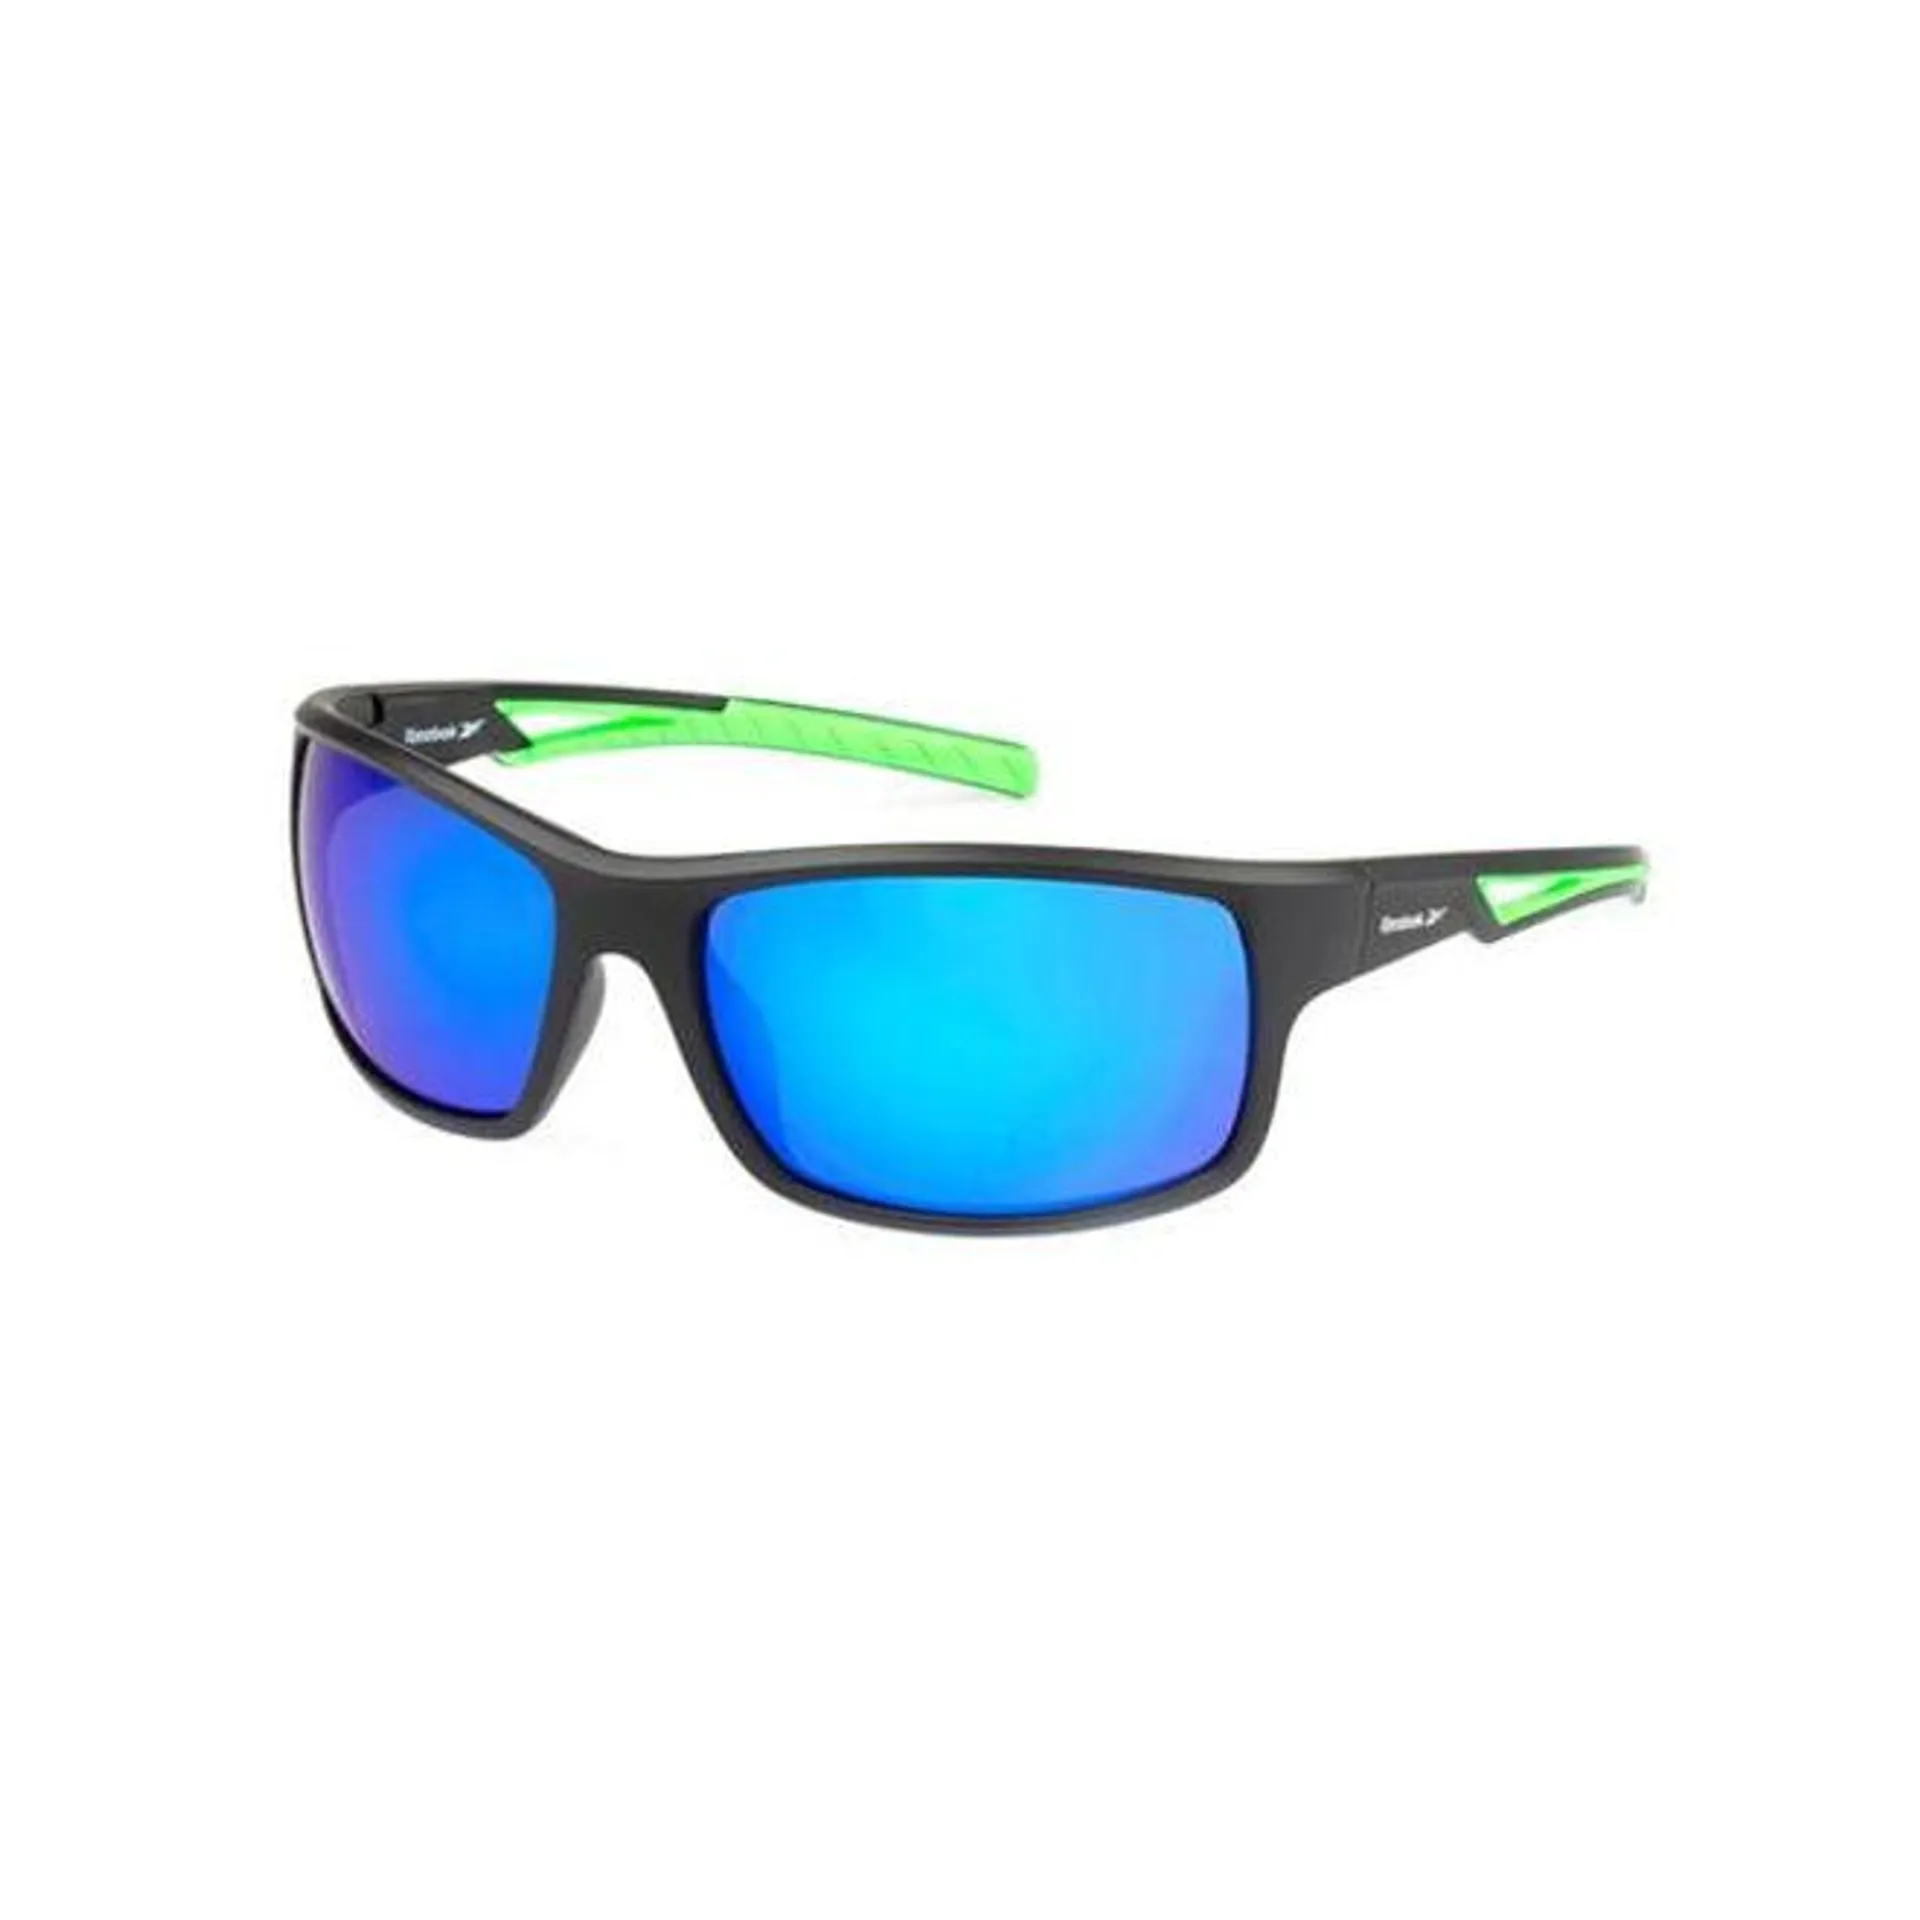 Reebok Mens 2107 Sports Sunglasses in Black